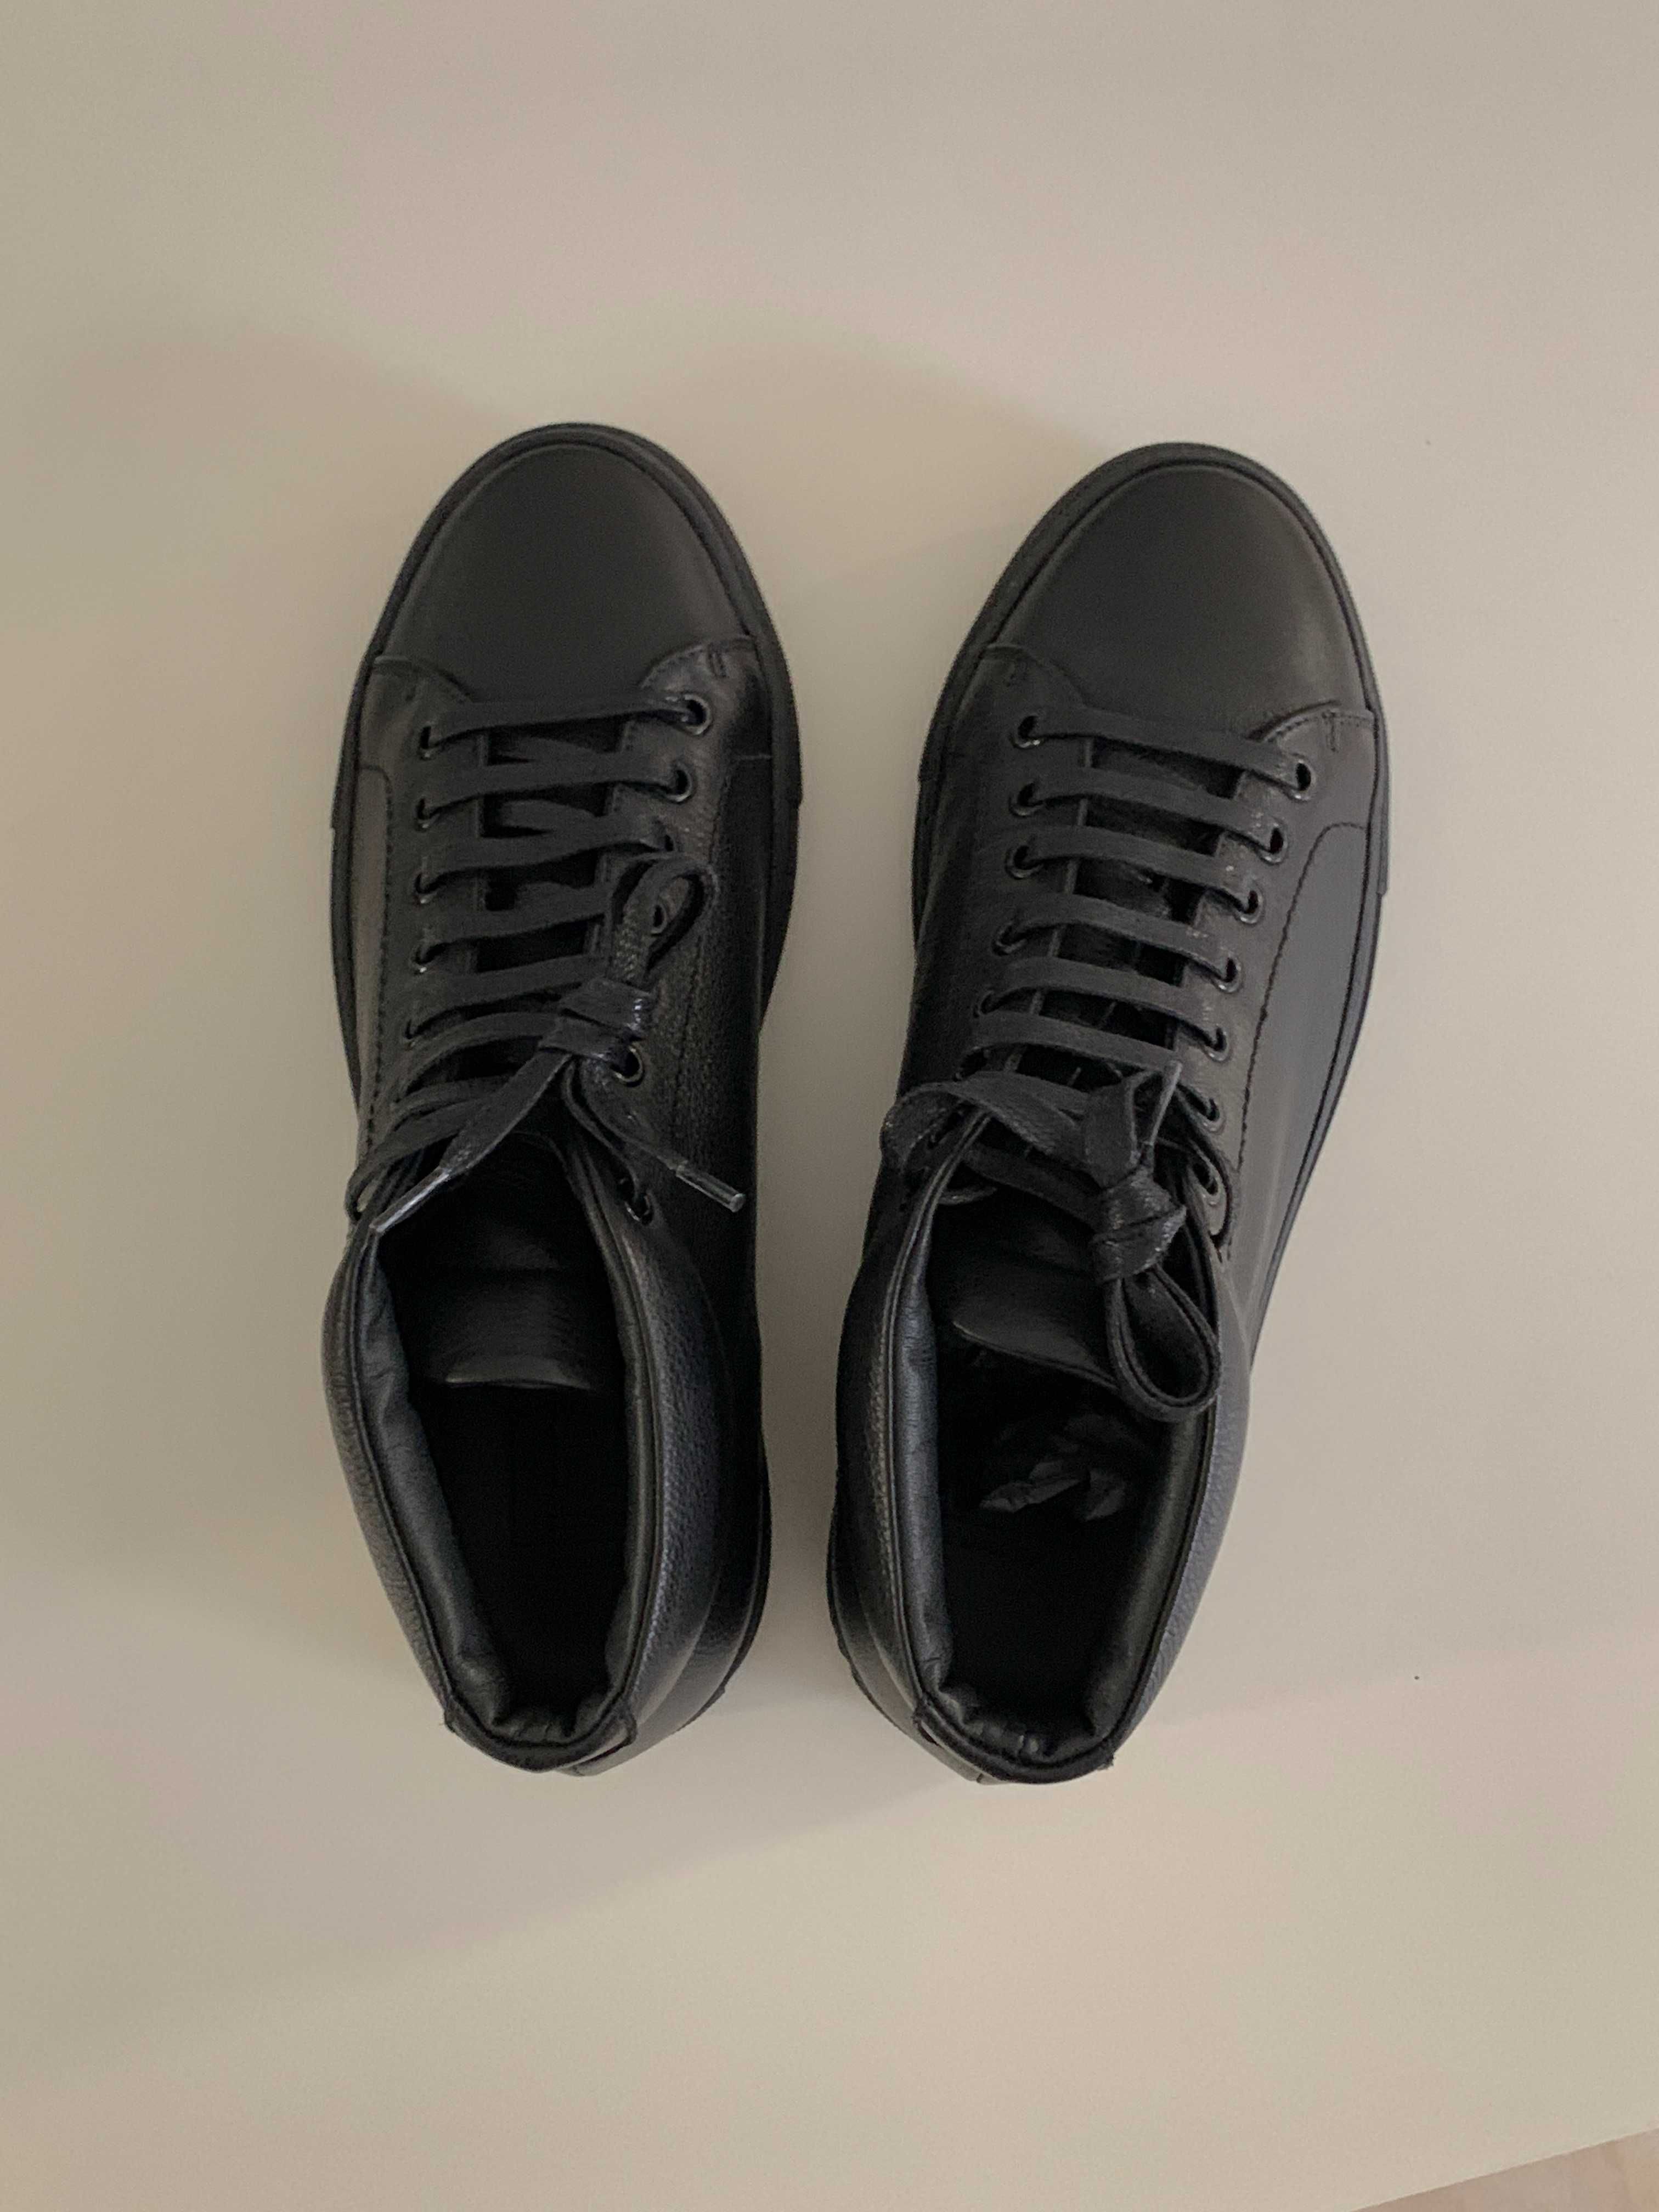 Sapatilha minimalista tipo bota homem marca Hydrogen-1 tamanho 39